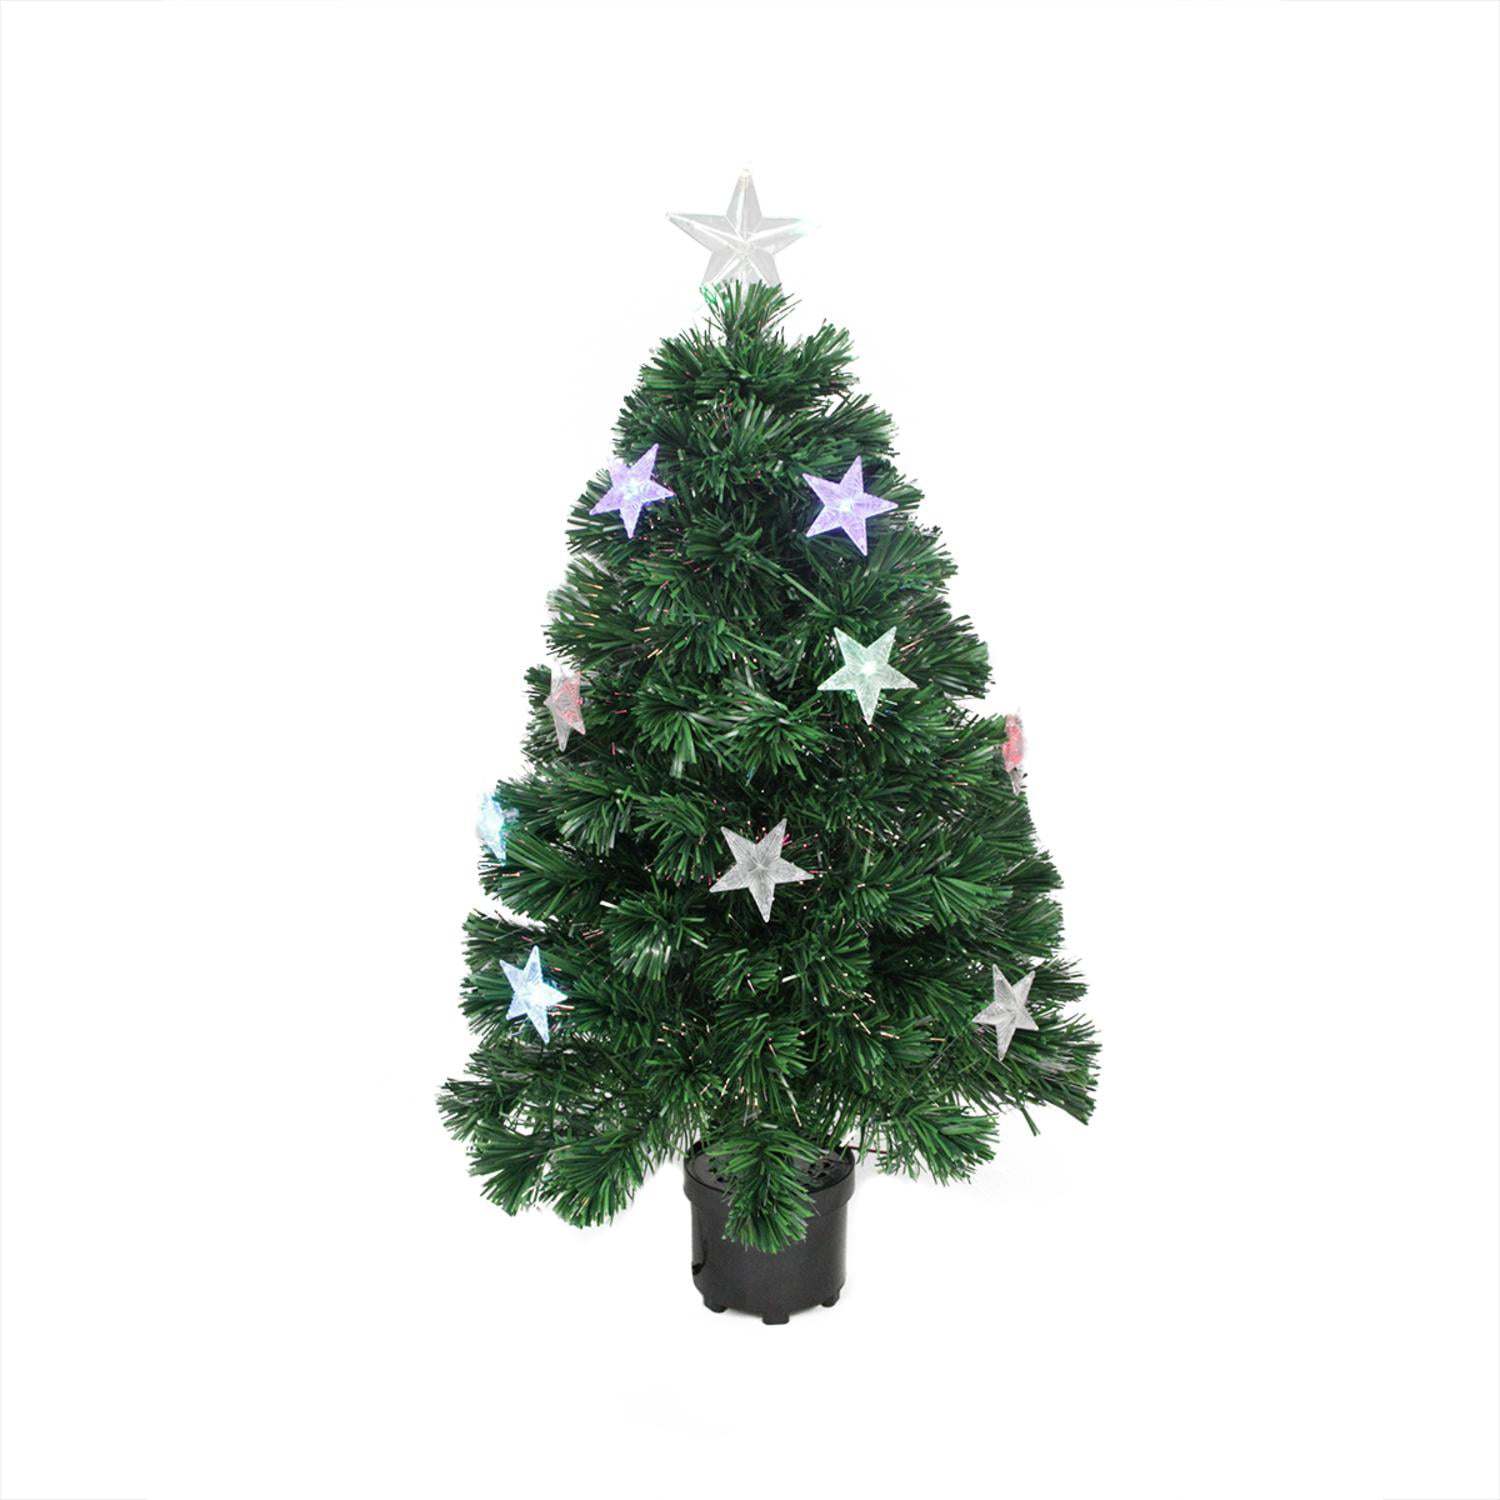 STAR SHAPE LED FIBRE OPTIC PRE-LIT COLOUR CHANGING ARTIFCIAL CHRISTMAS XMAS TREE